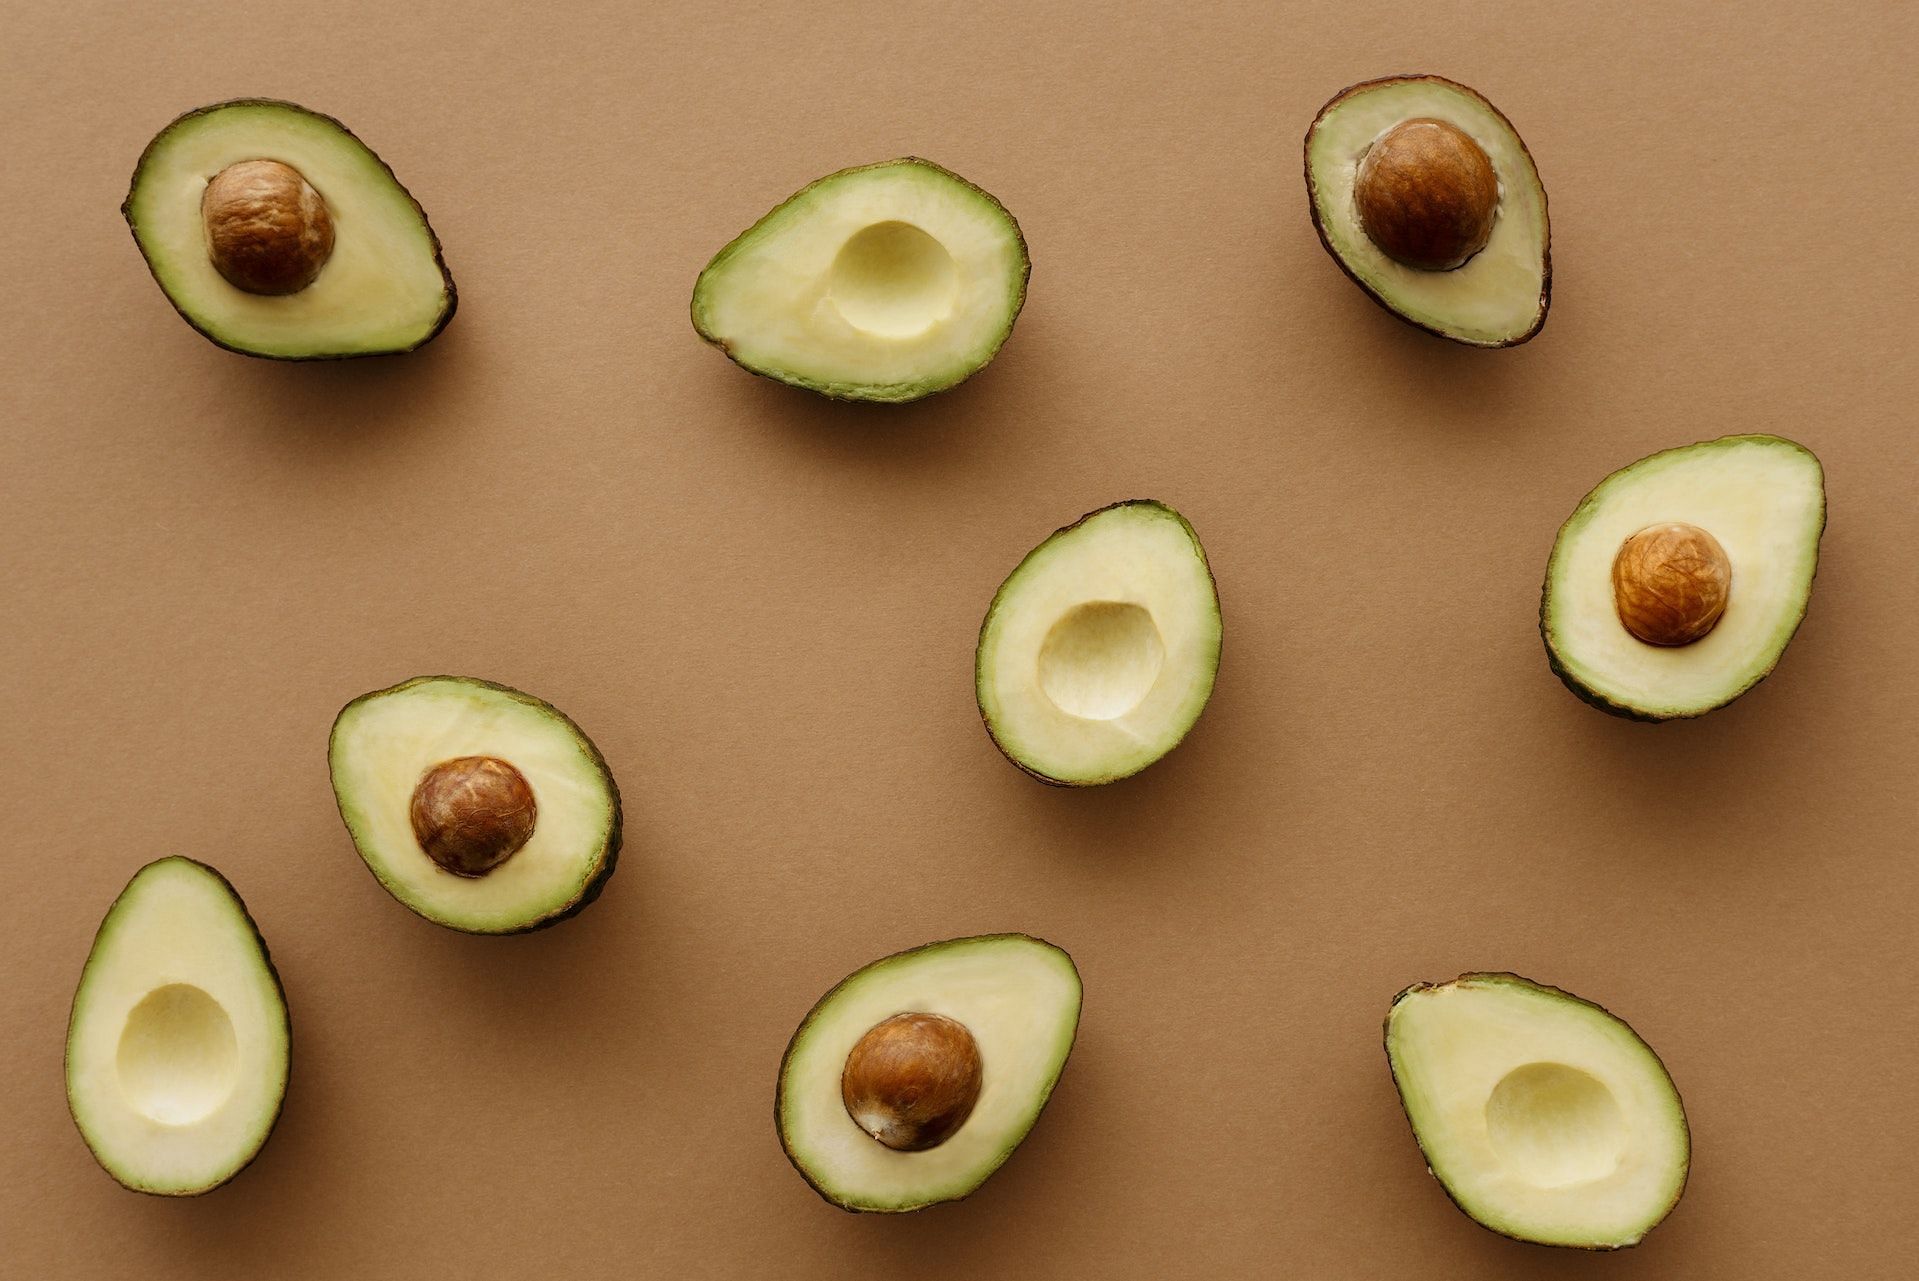 Avocados in daily diet. (Image via Pexels/ Vanessa Loring)